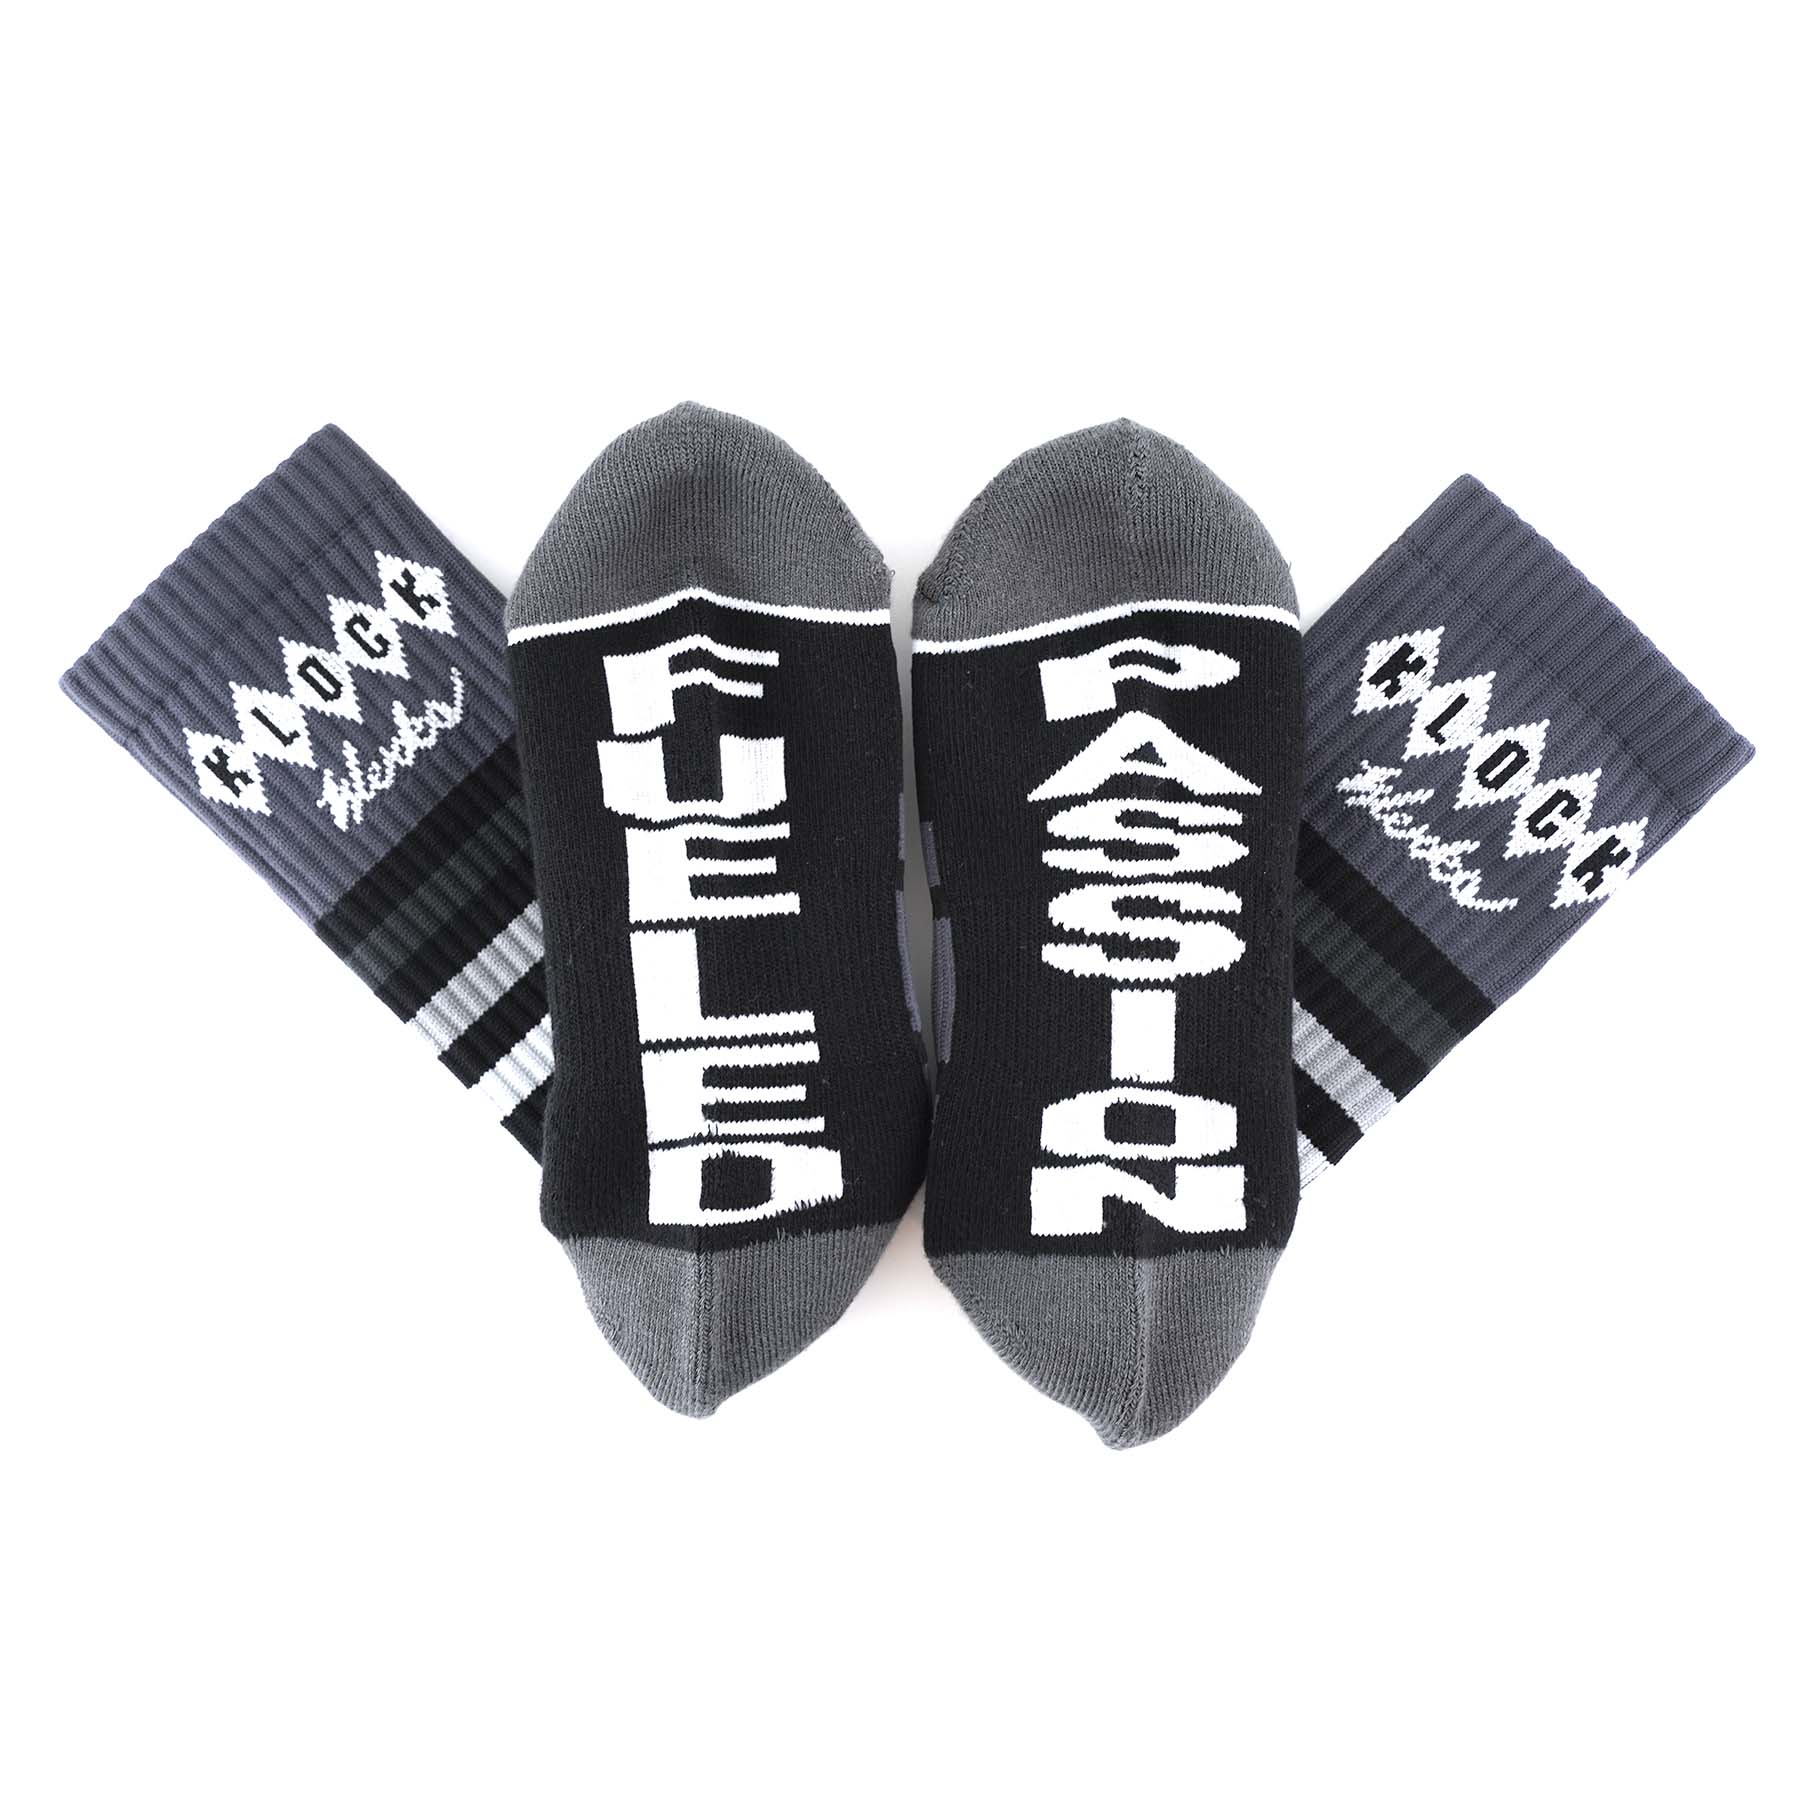 Klock Werks x Fuel Klock Crew Socks in Black with Fueled Passion on the feet.(Black with Fueled Passion on the feet)